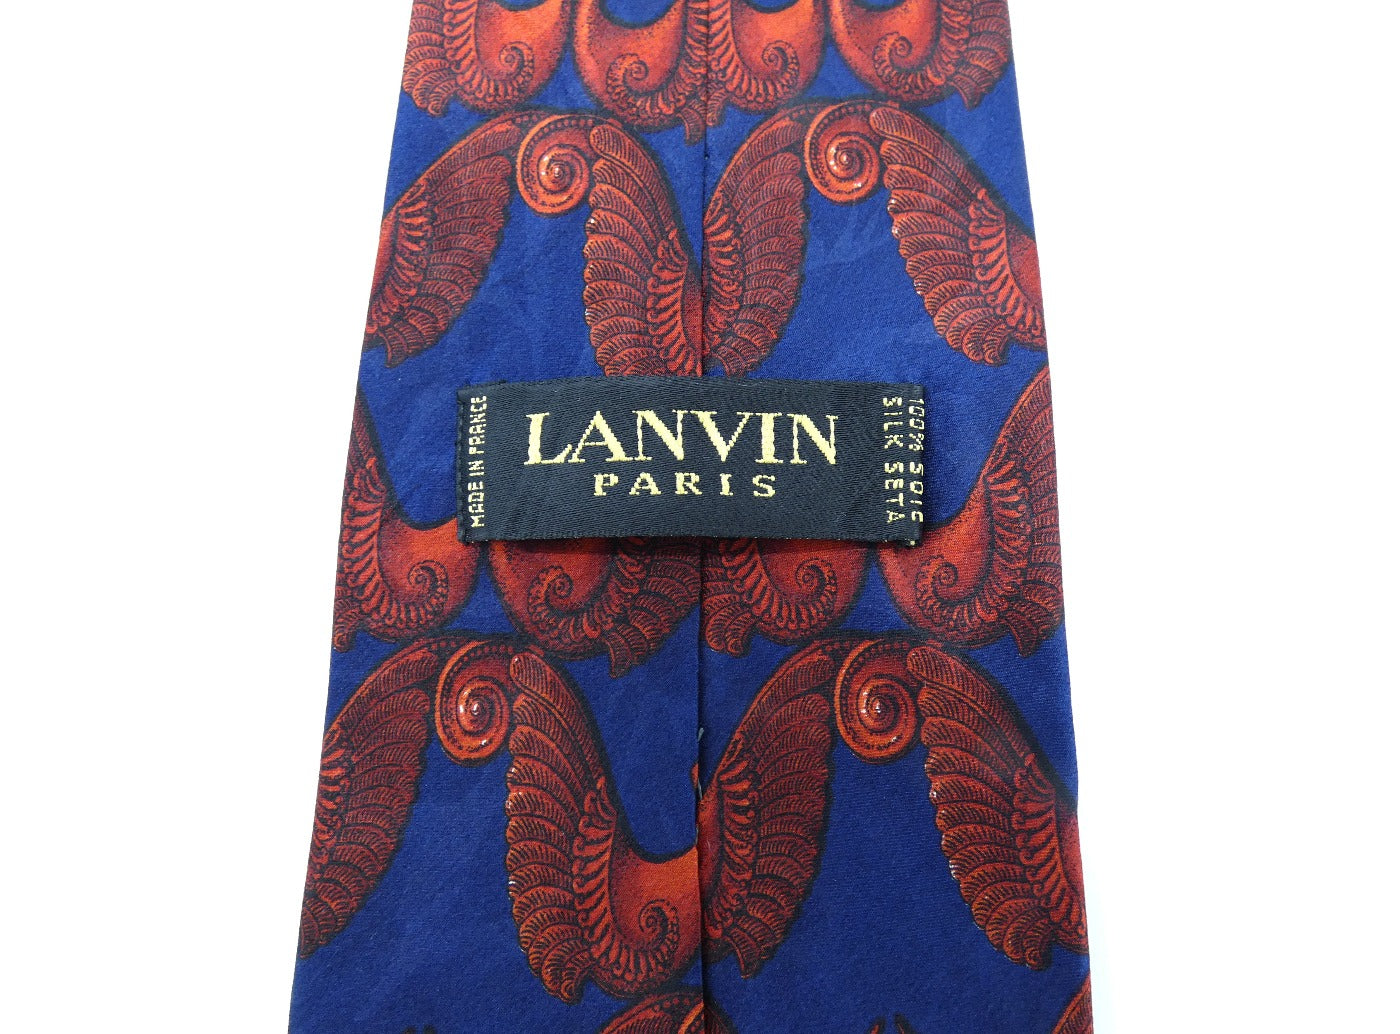 Lanvin Royal Blue and Bordeaux Bird Graphic Silk Tie Ties Lanvin